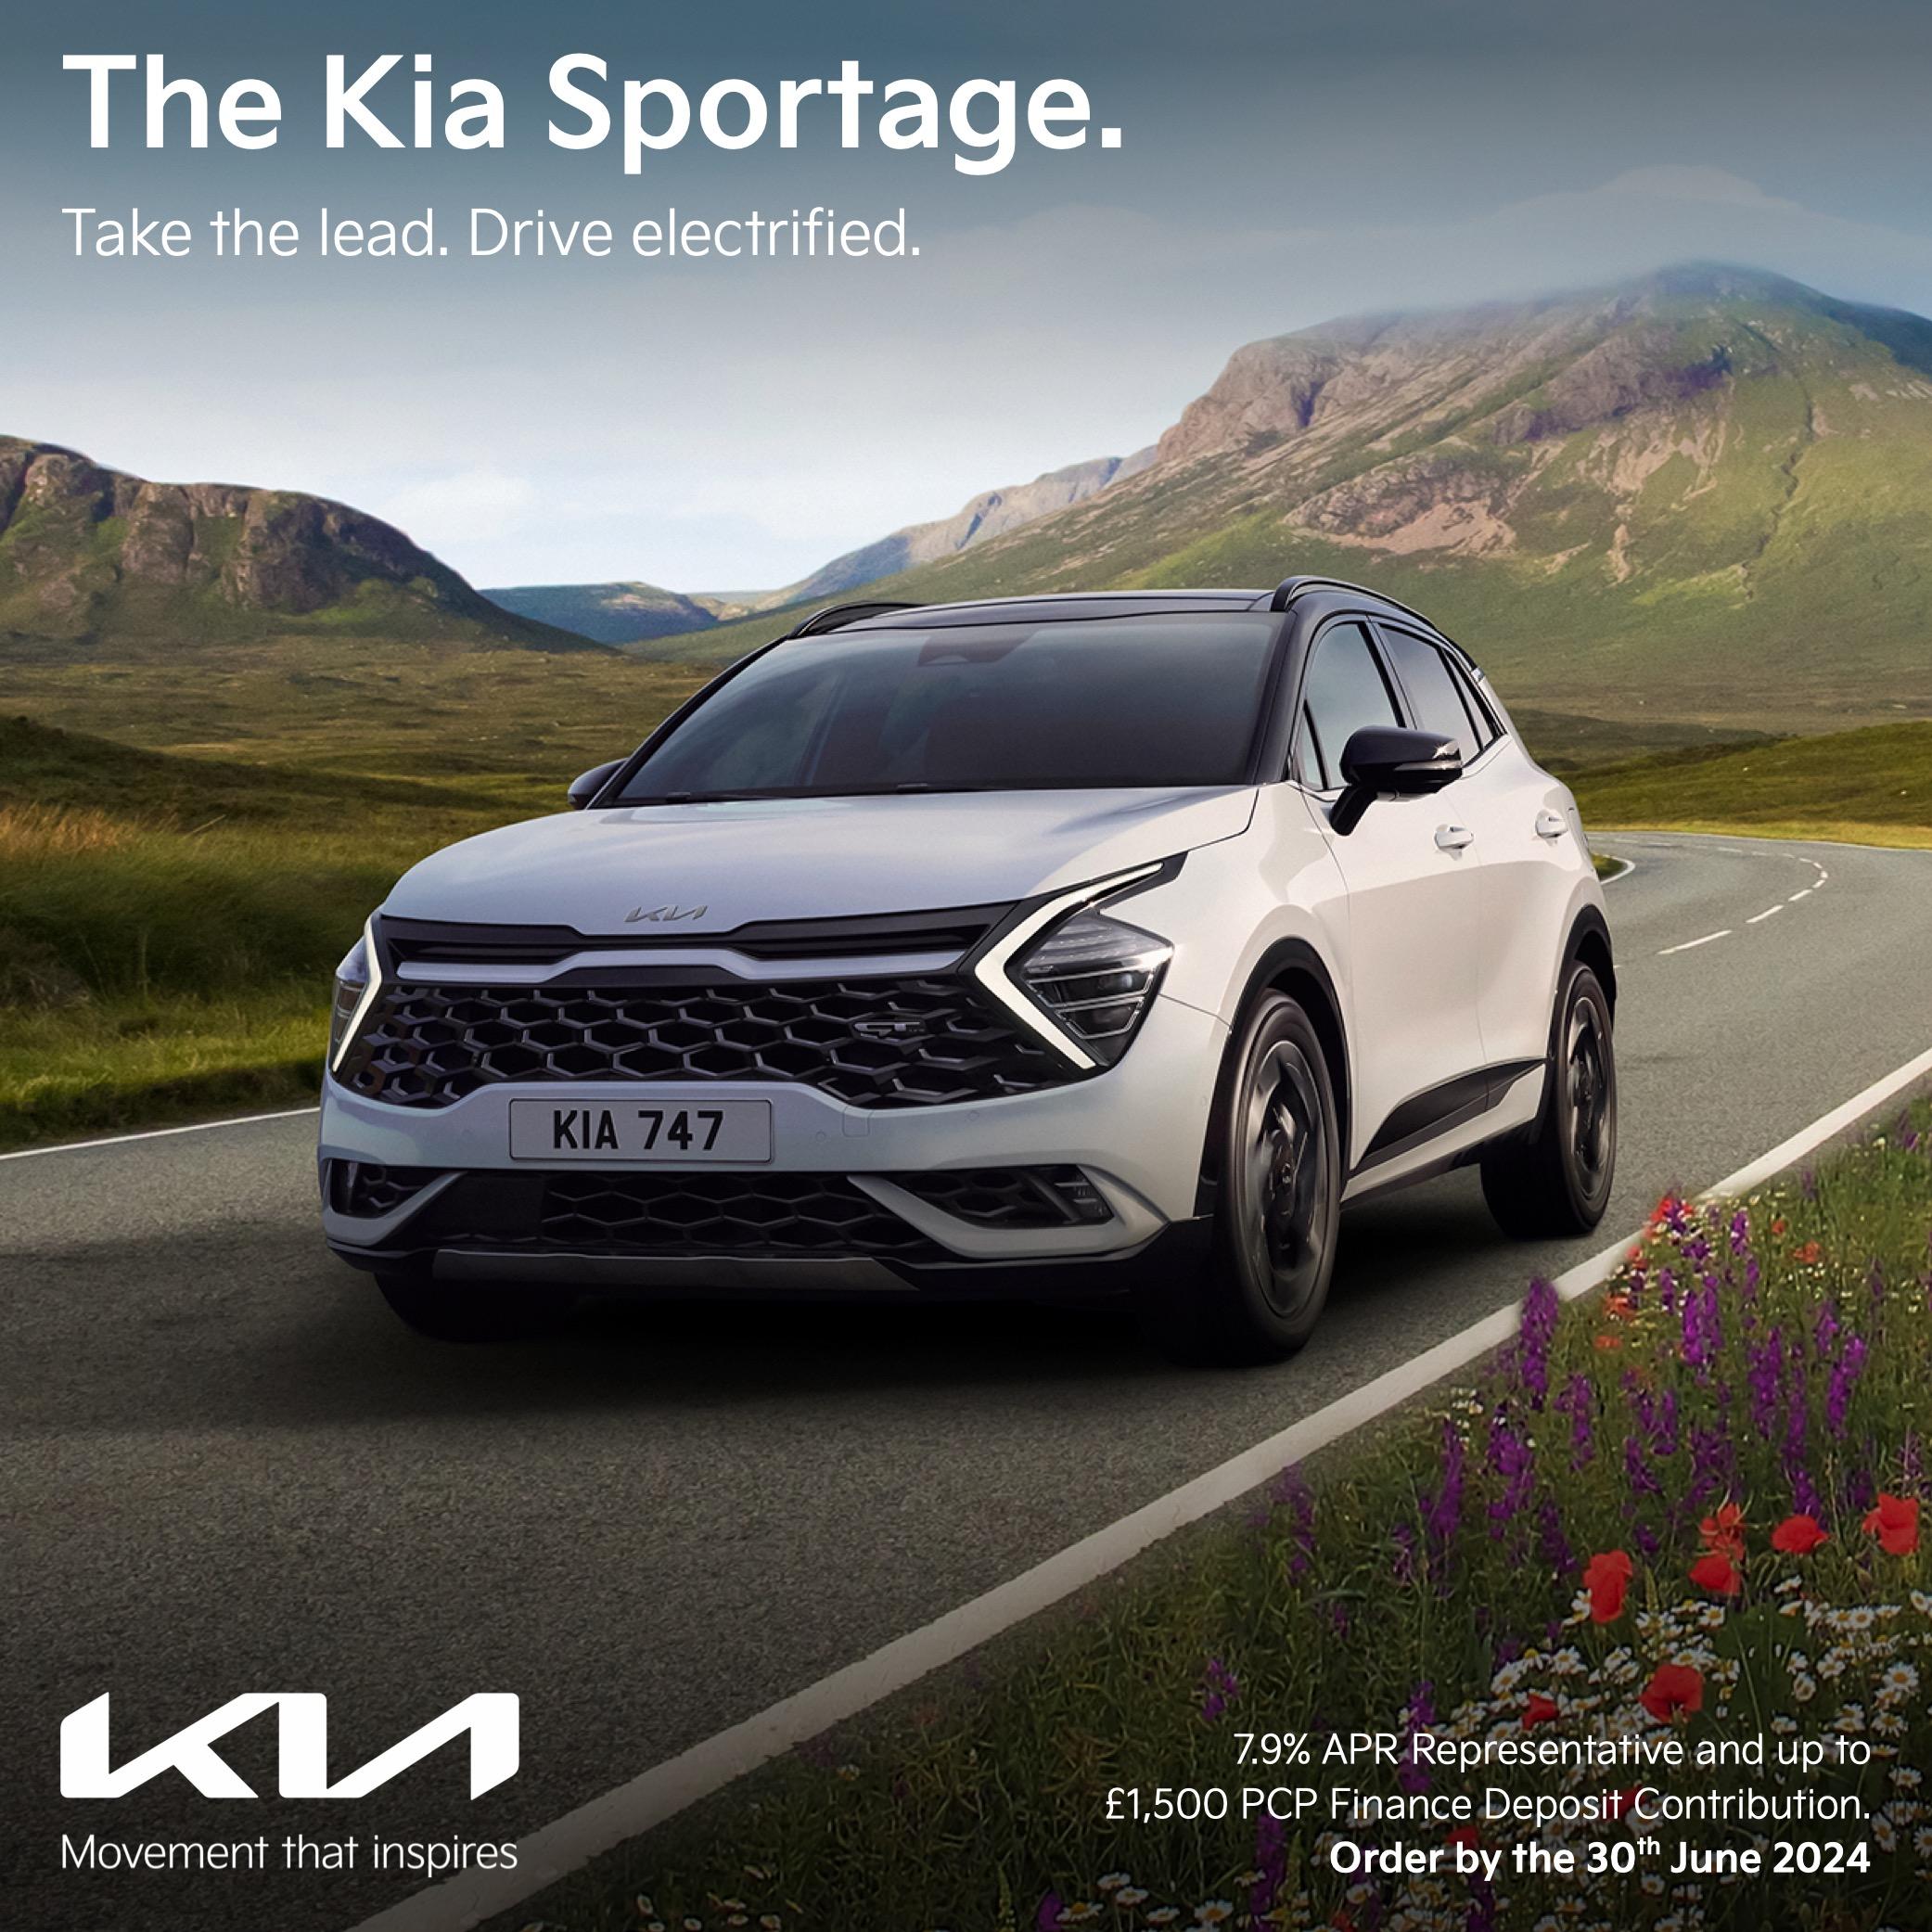 Kia sportage with offer